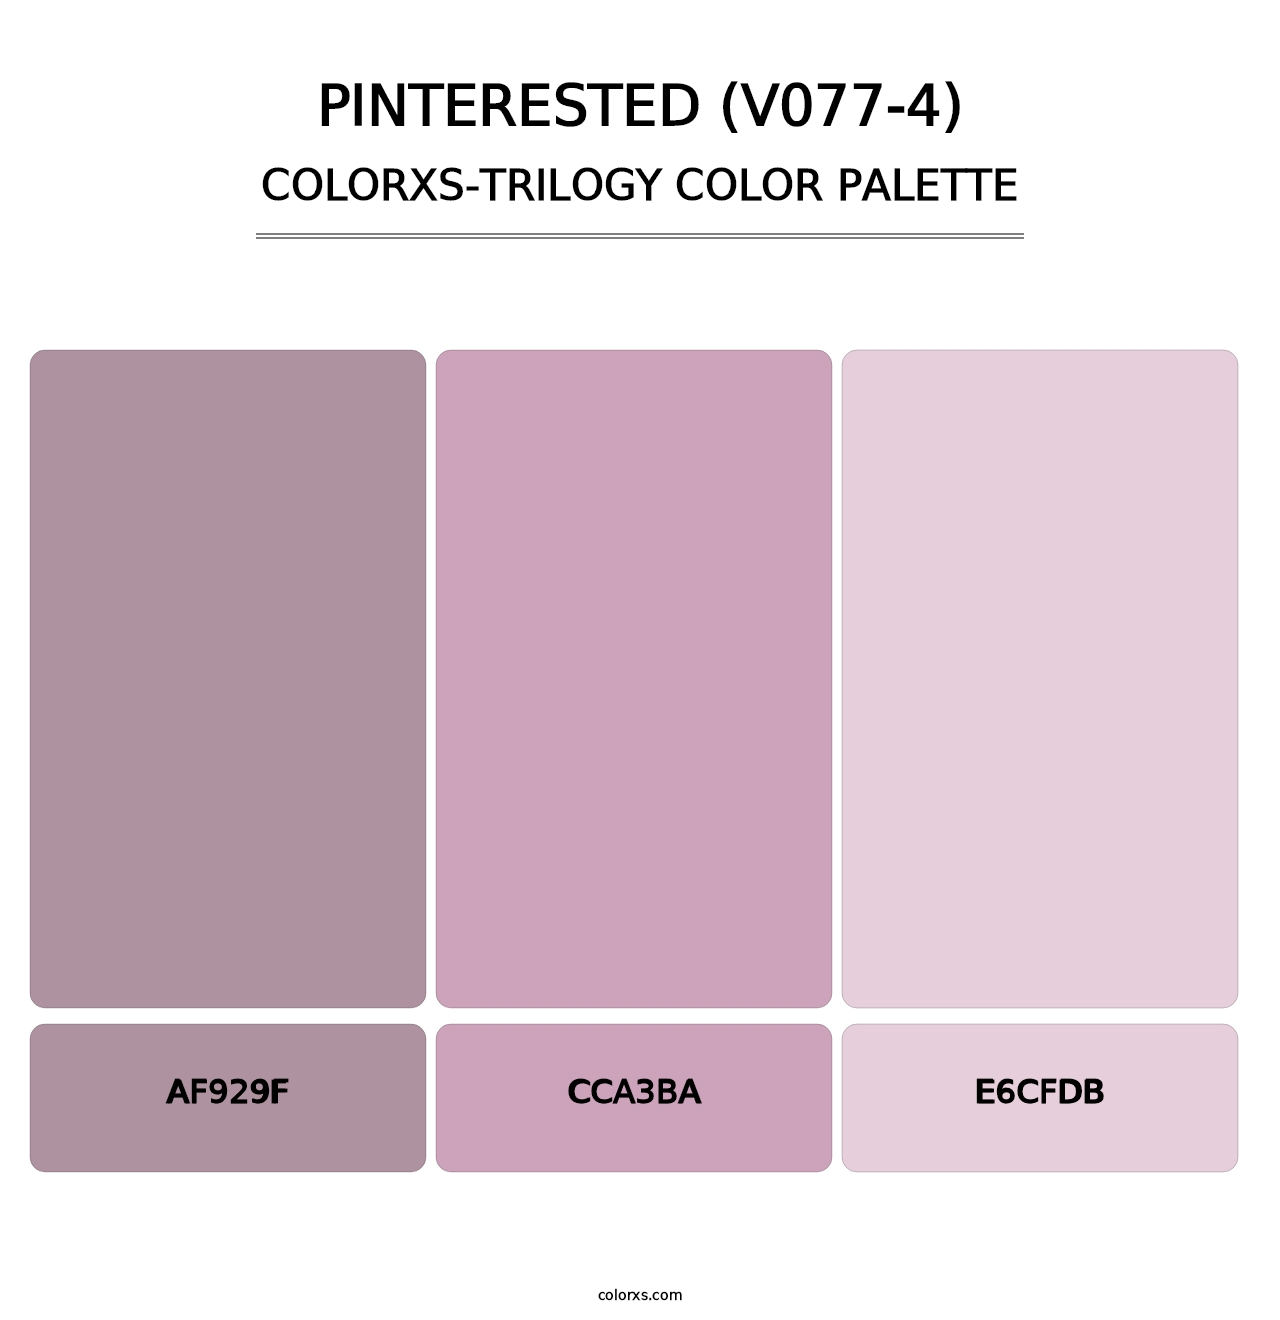 Pinterested (V077-4) - Colorxs Trilogy Palette